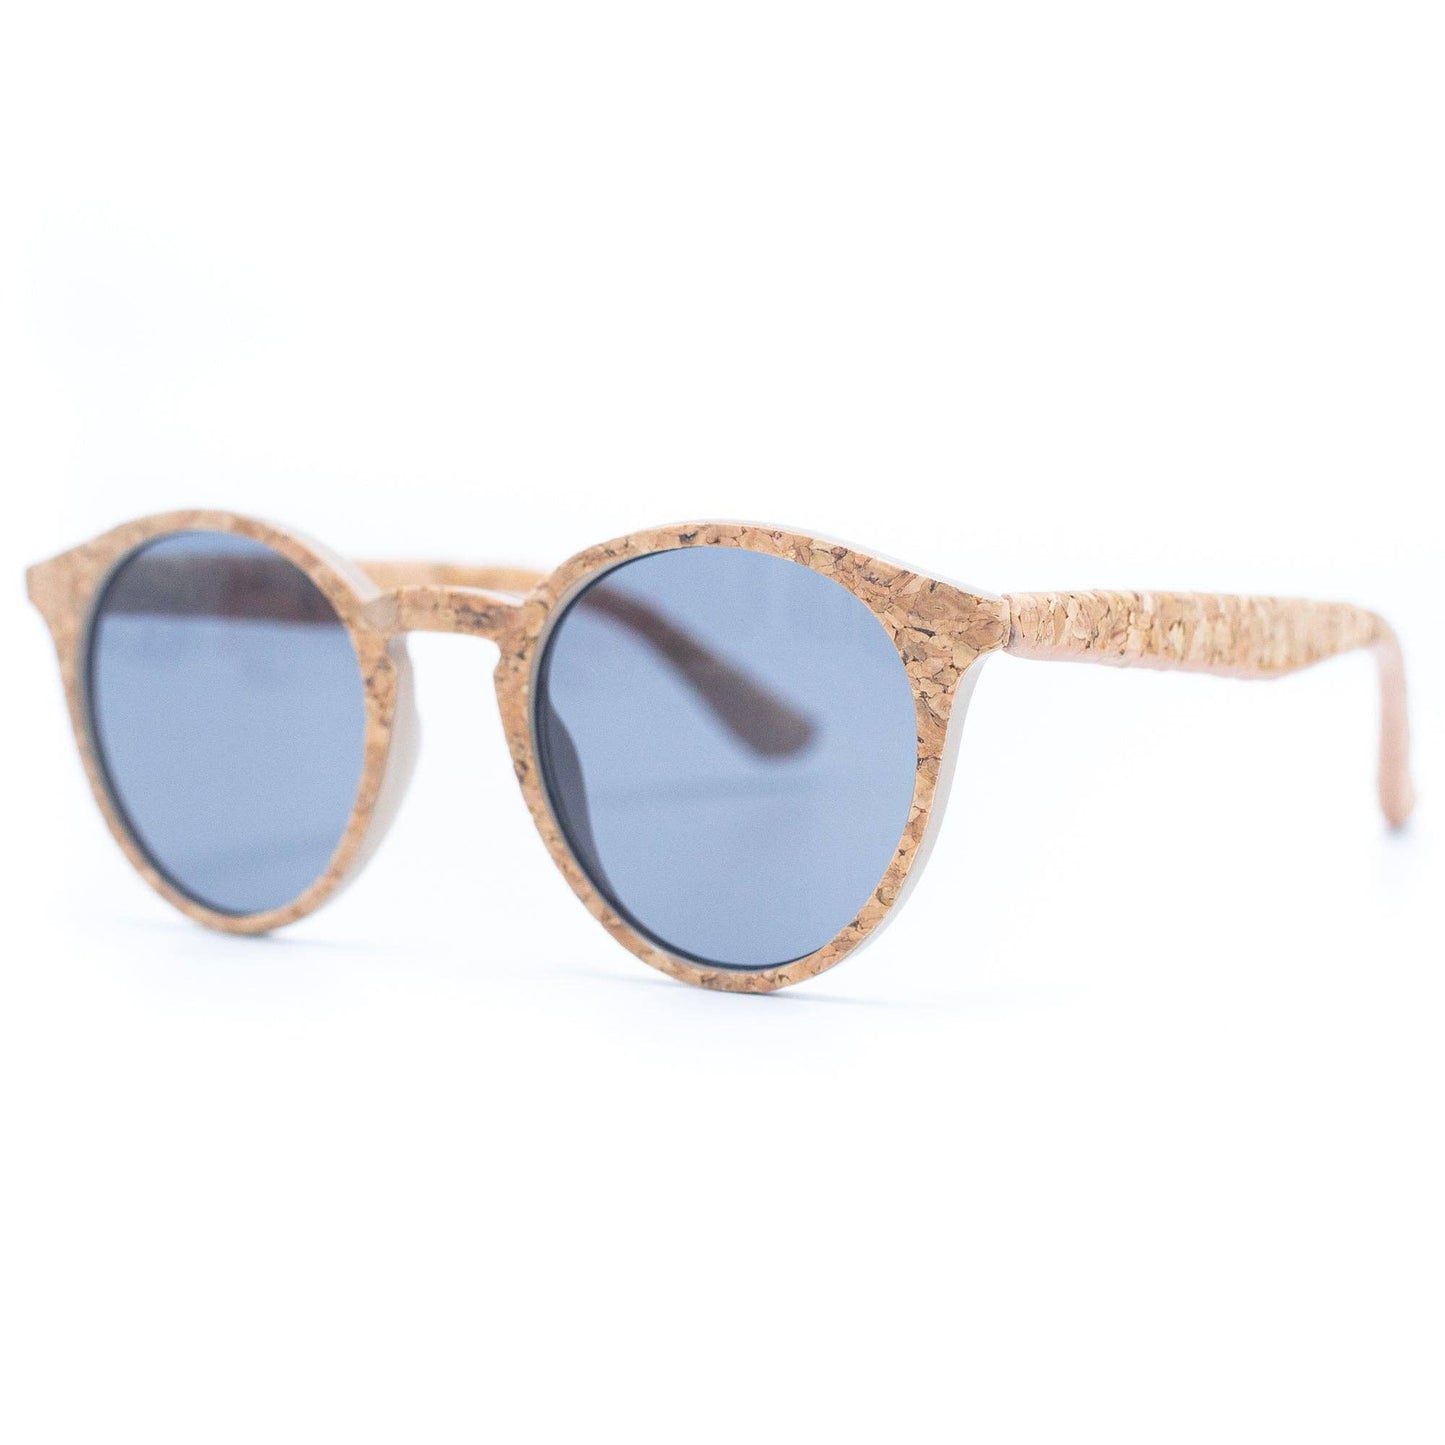 Cork UV protection women eyewear sunglasses(Including case)